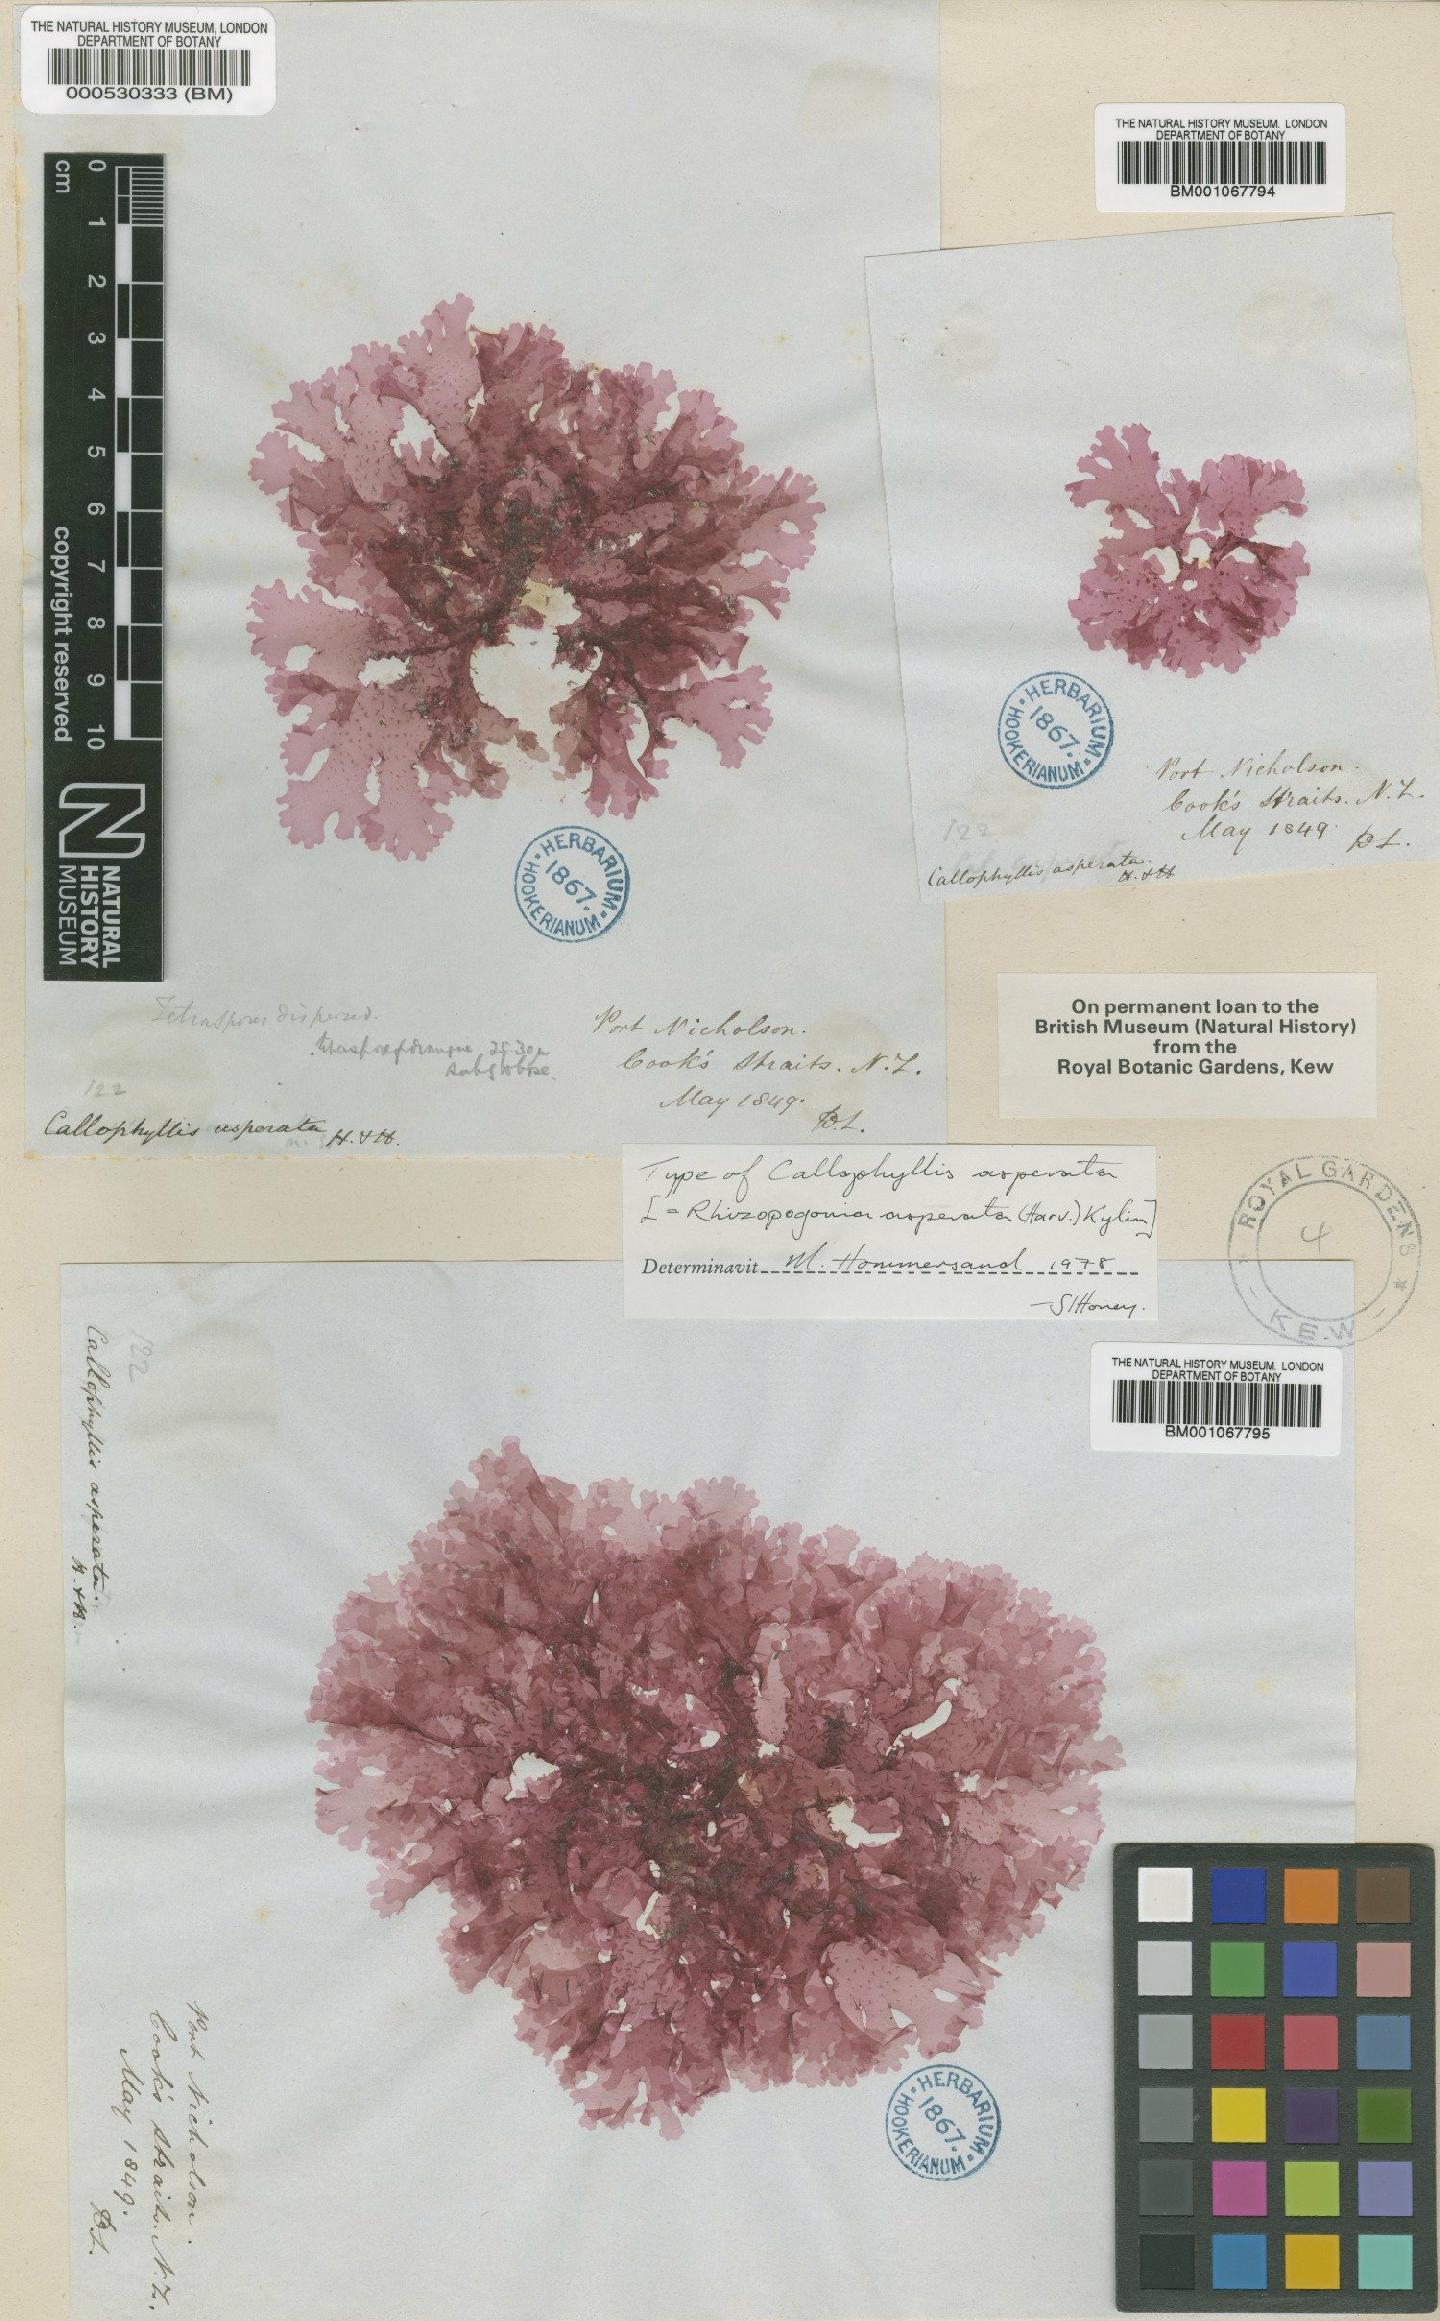 To NHMUK collection (Rhizopogonia asperata (Harv.) Kylin; Isosyntype; NHMUK:ecatalogue:2320901)